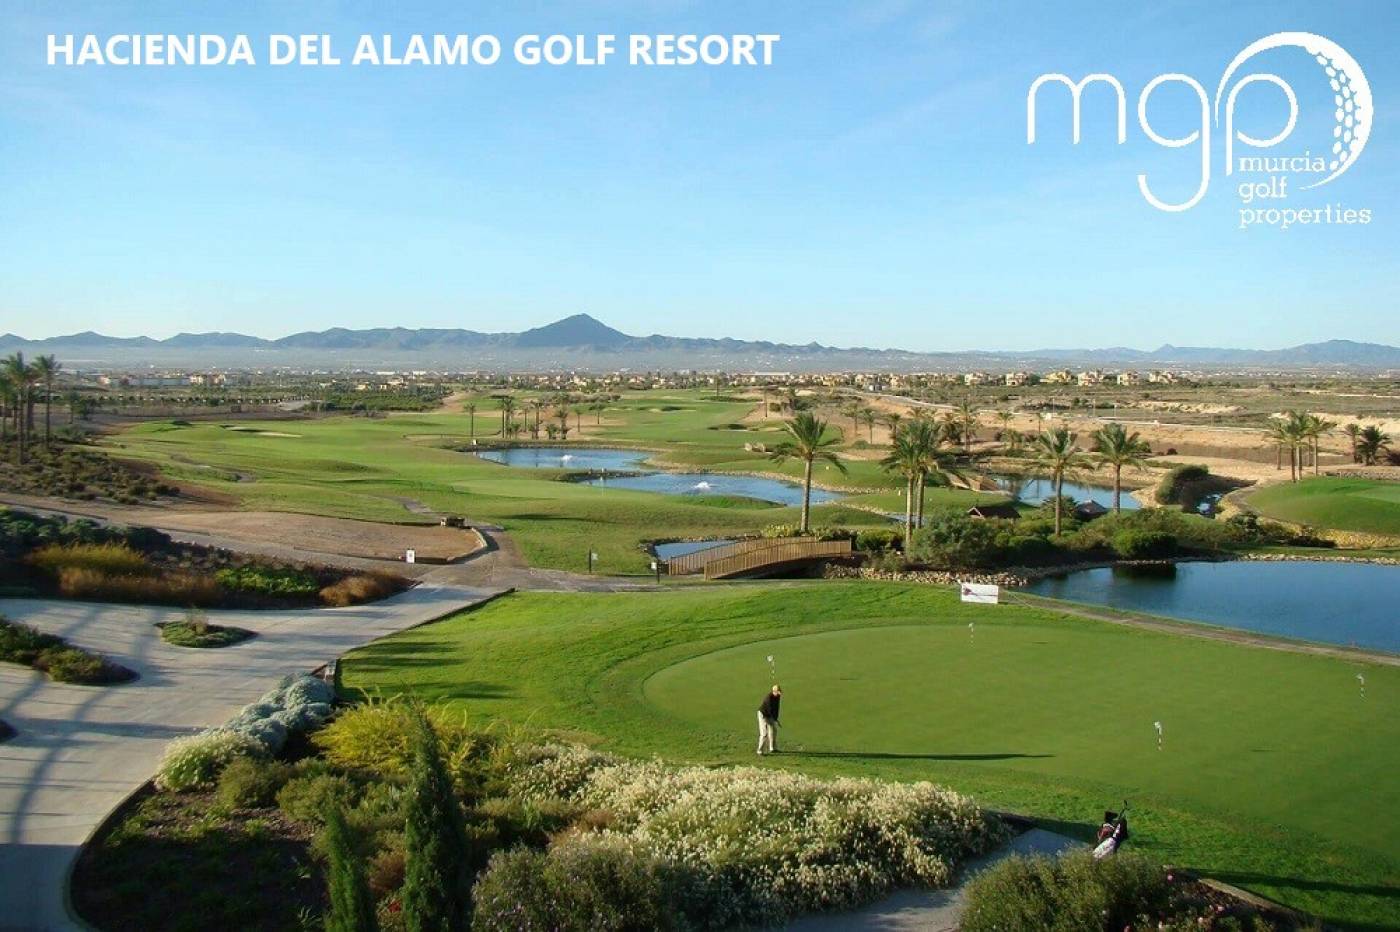 Murcia Golf Properties: award-winning specialist estate agent in the Murcia Region